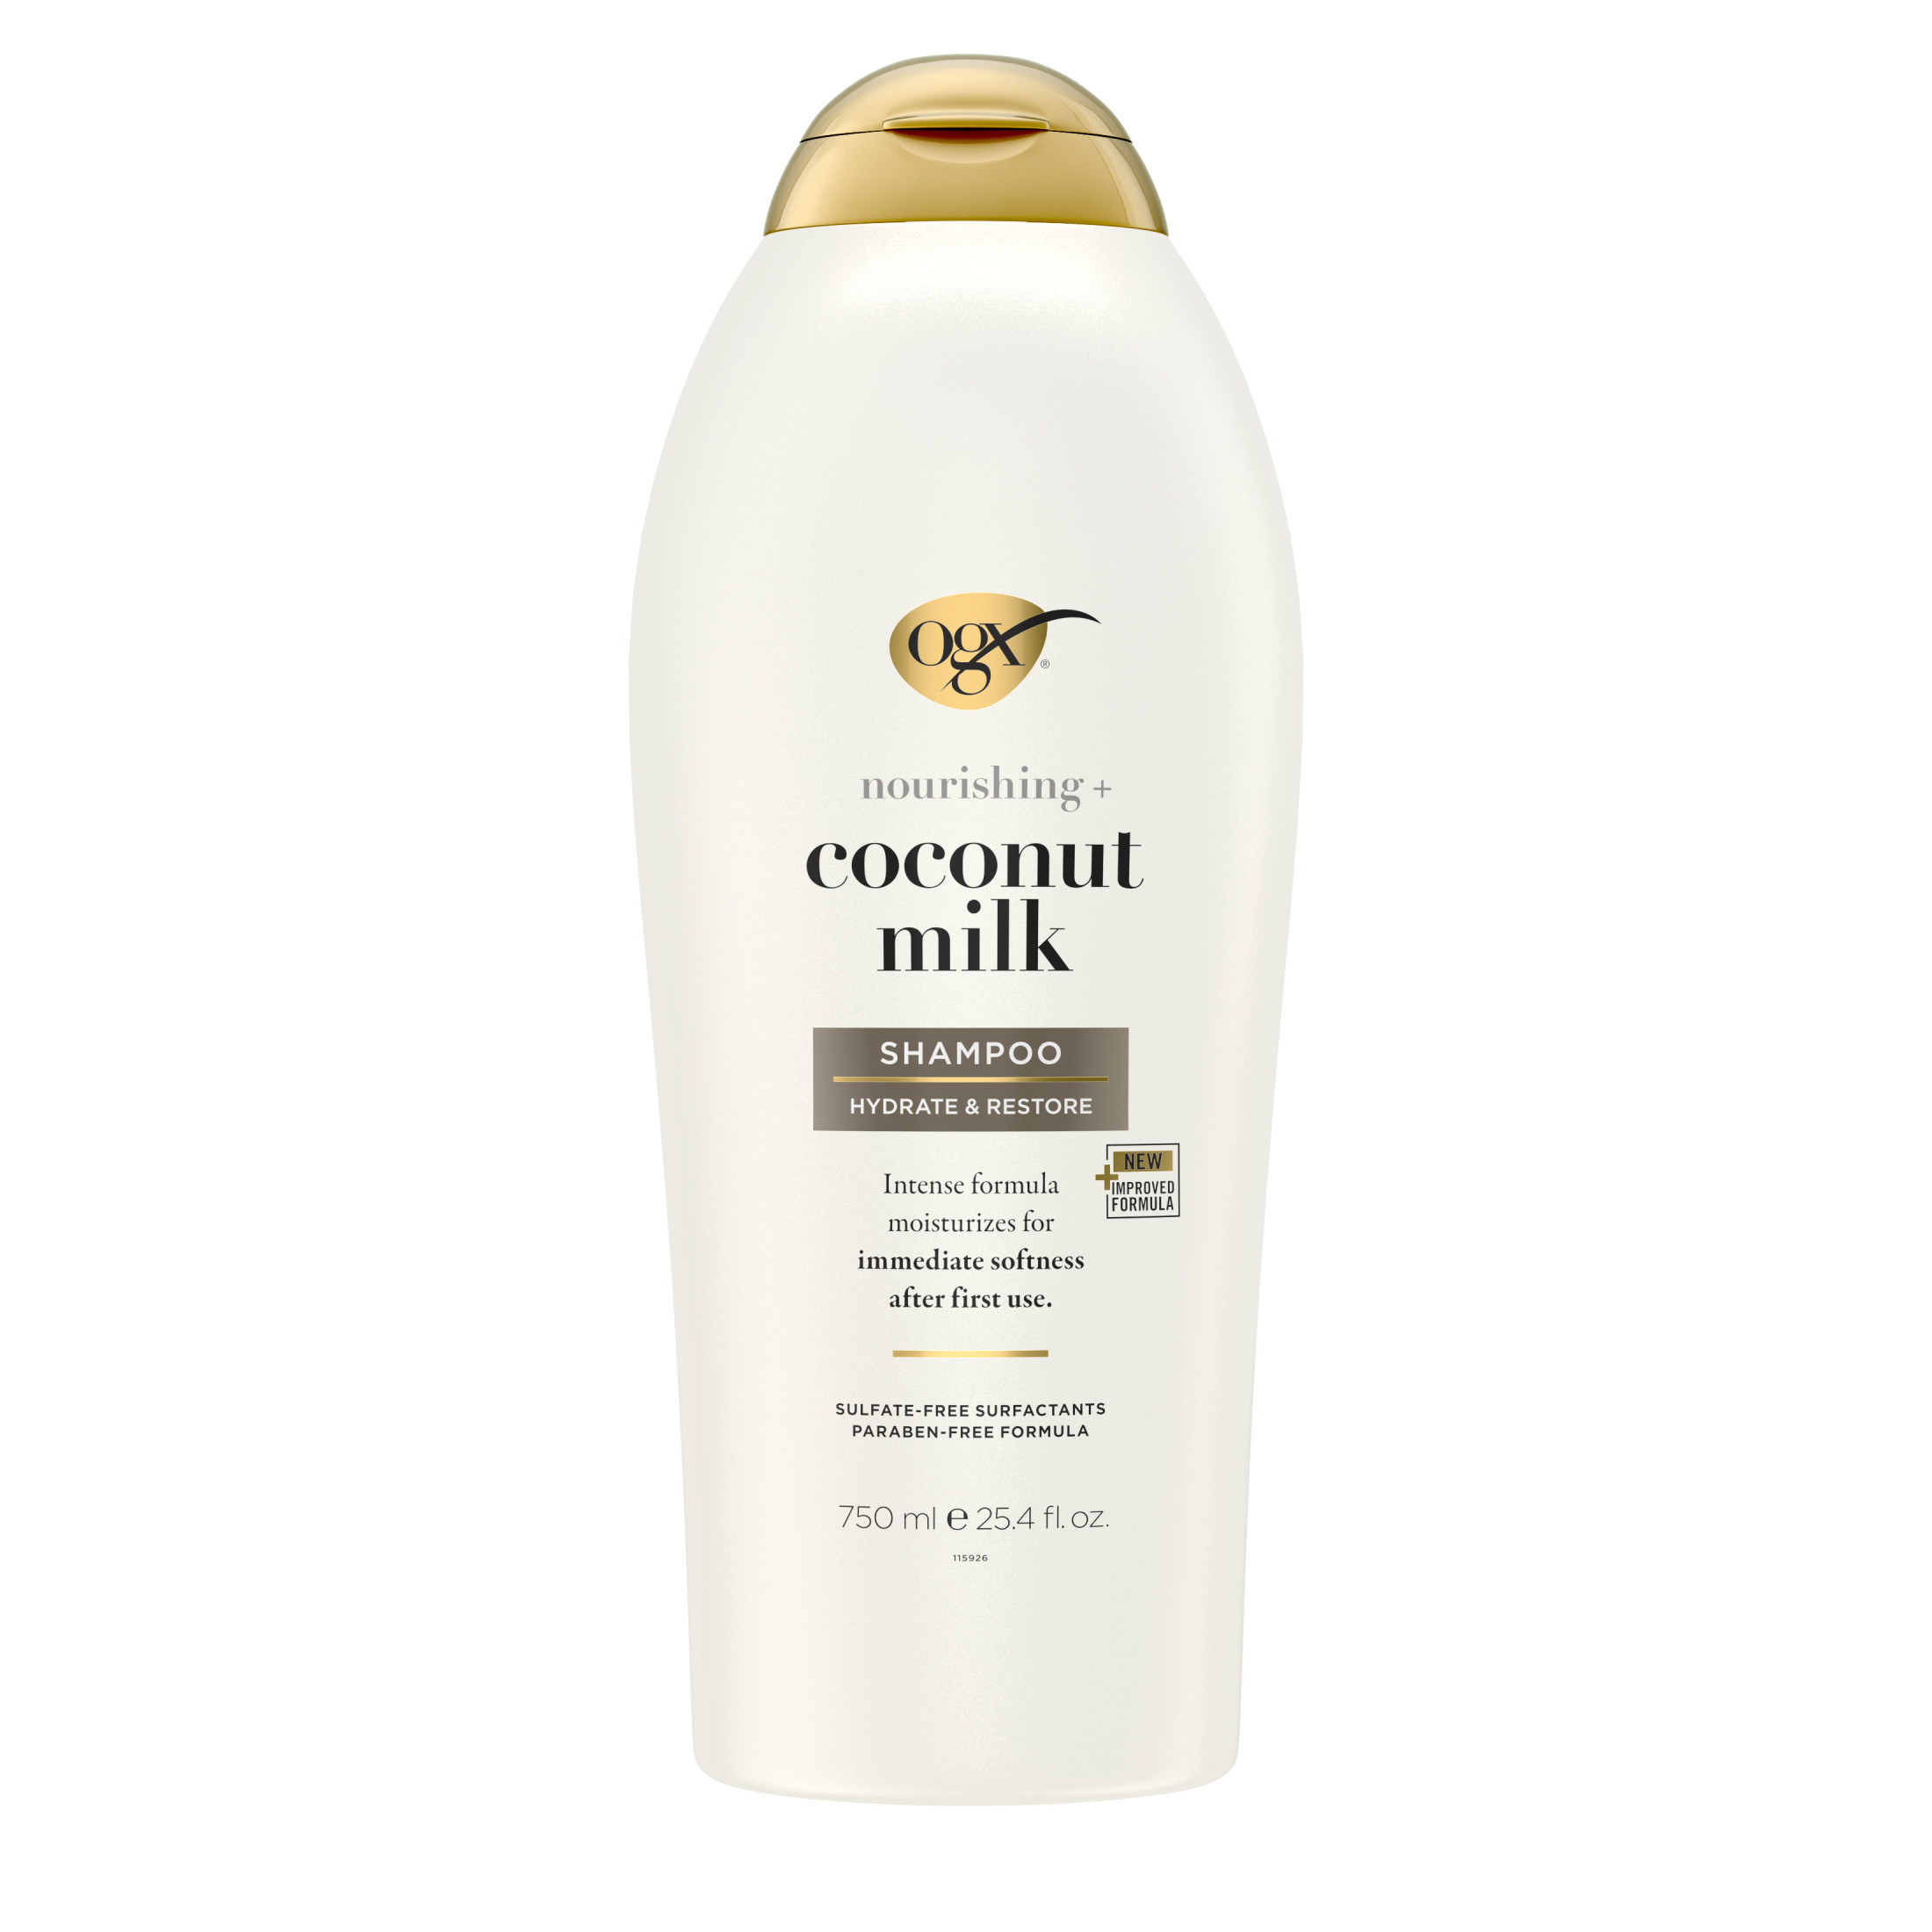 OGX Nourishing + Coconut Milk Moisturizing Daily Shampoo with Egg White Protein, 25.4 fl oz - image 1 of 10